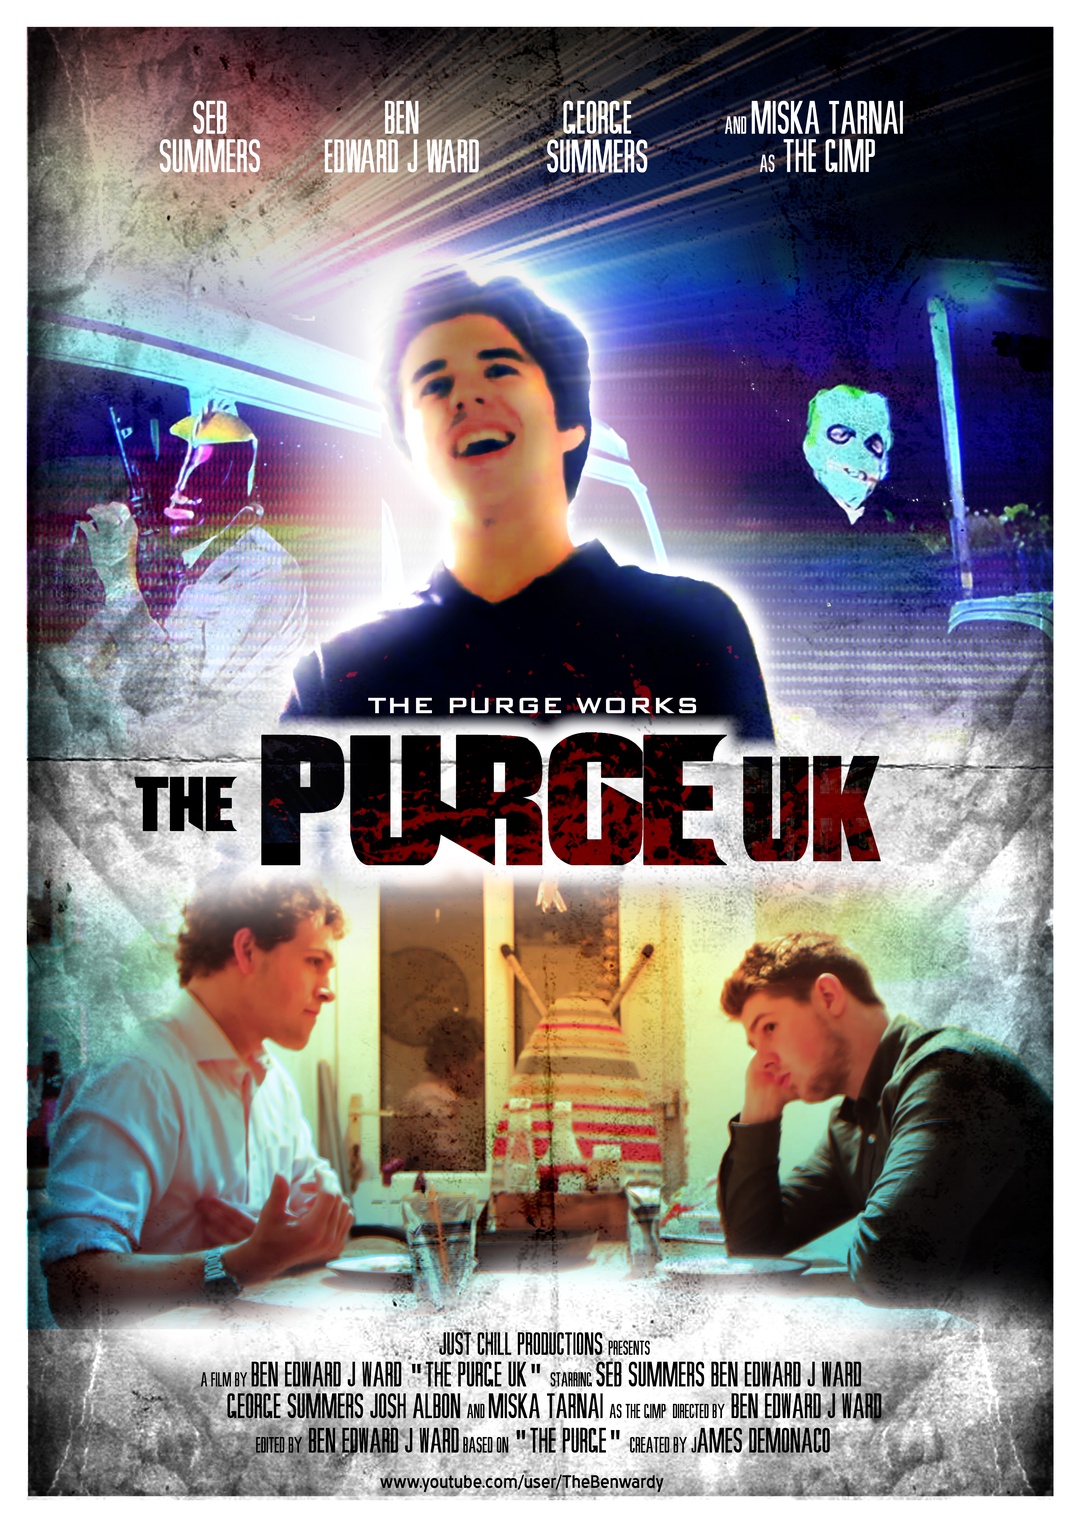 The Purge UK